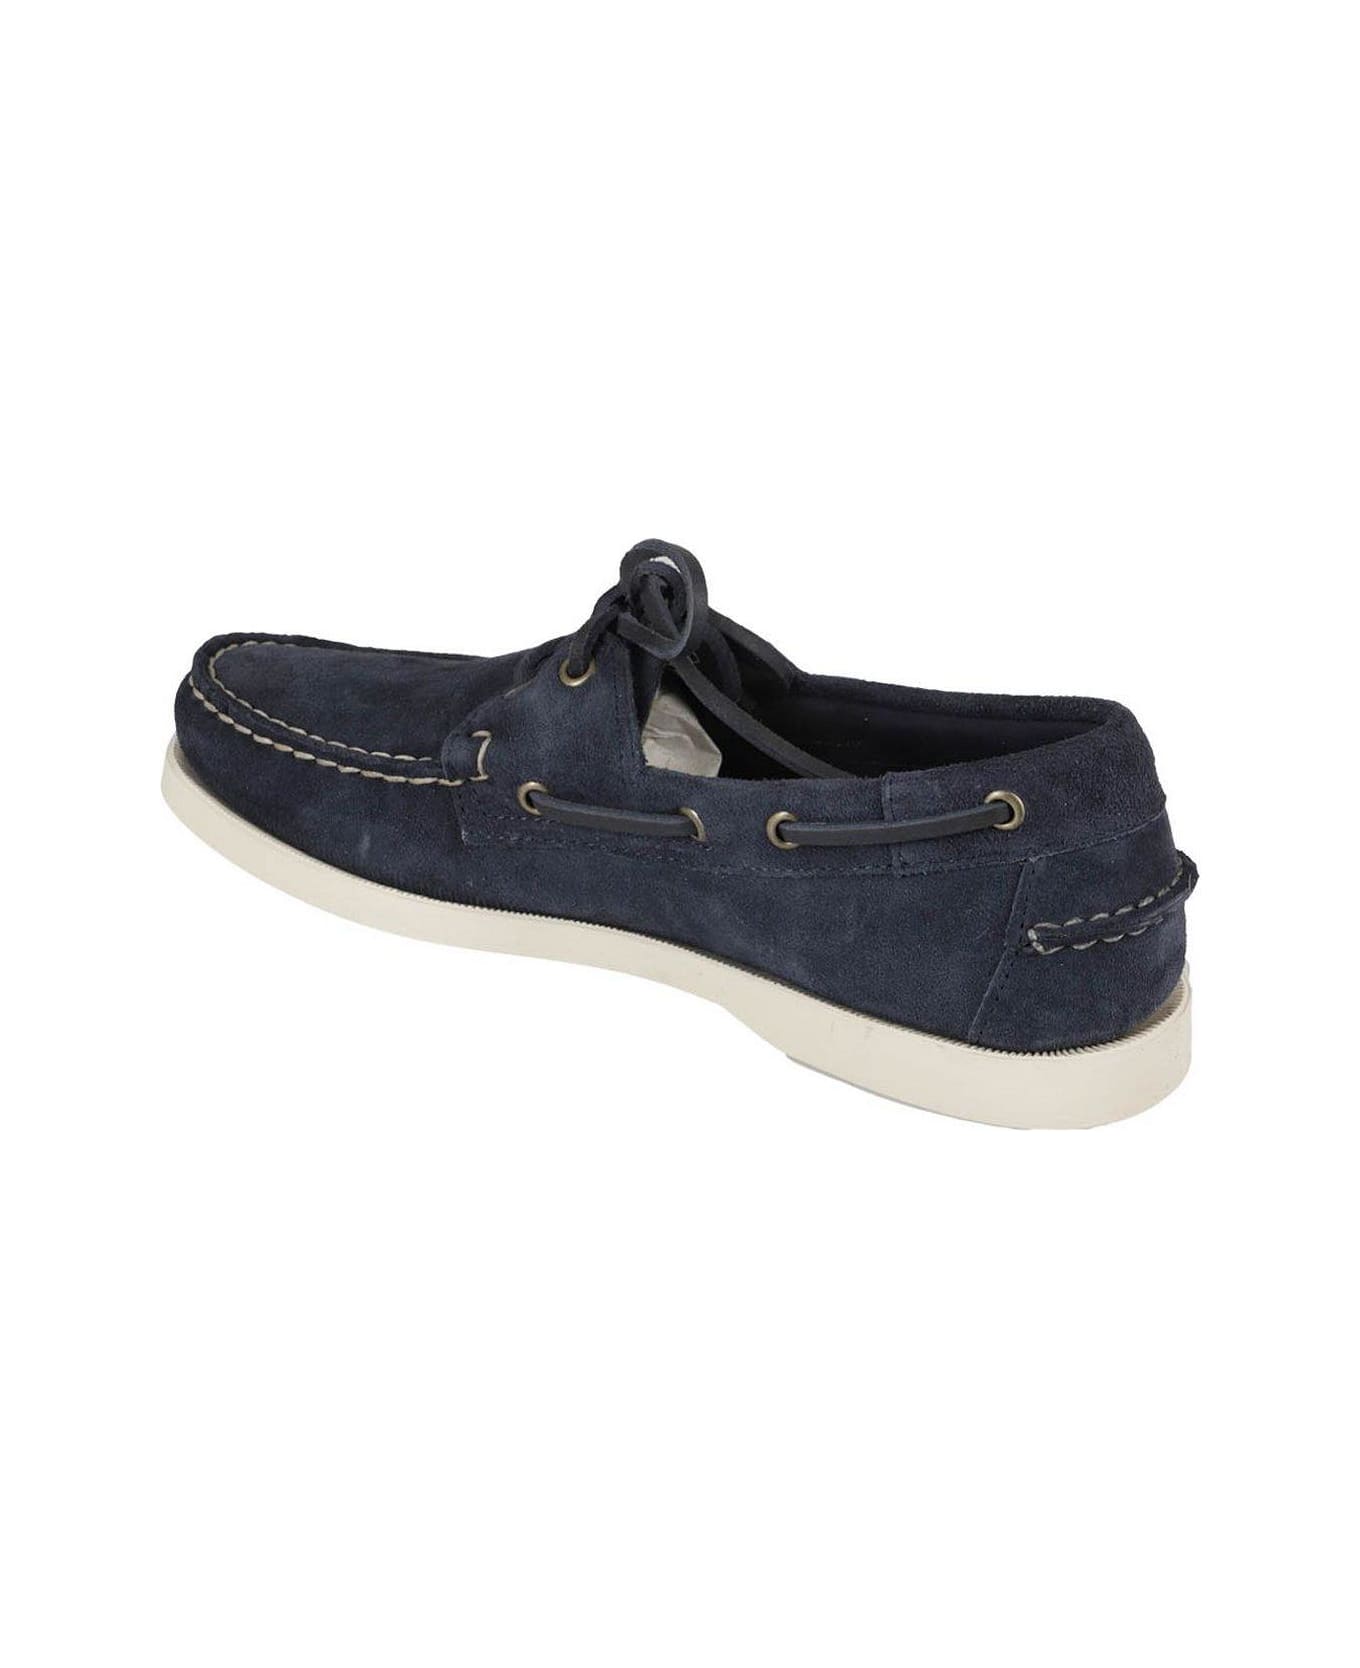 Sebago Lace-up Round Toe Boat Shoes - Blue Navy